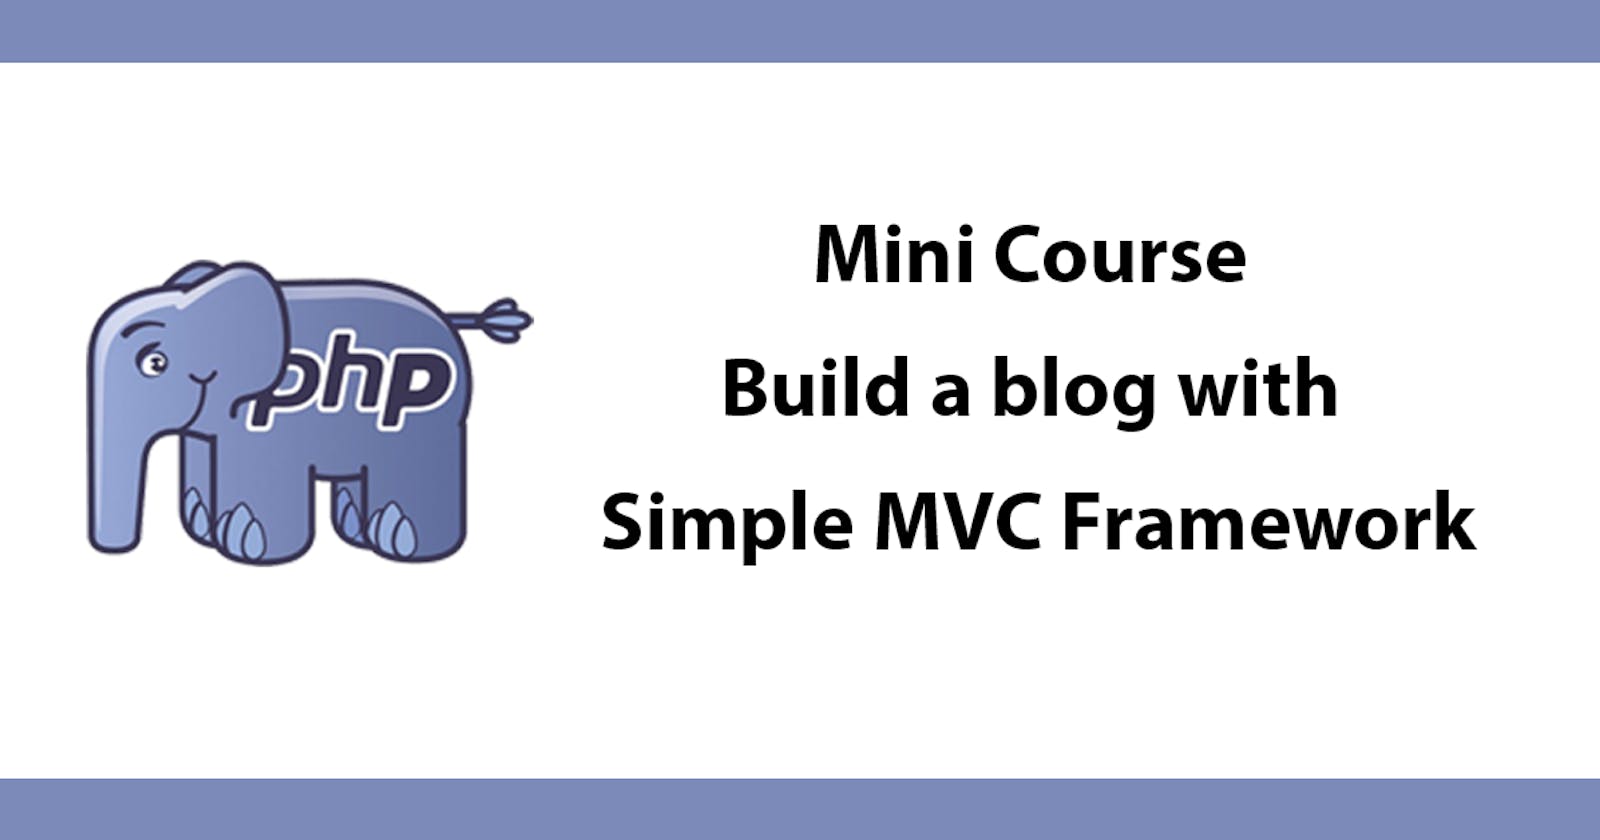 Mini Course - Build a blog with Simple MVC Framework